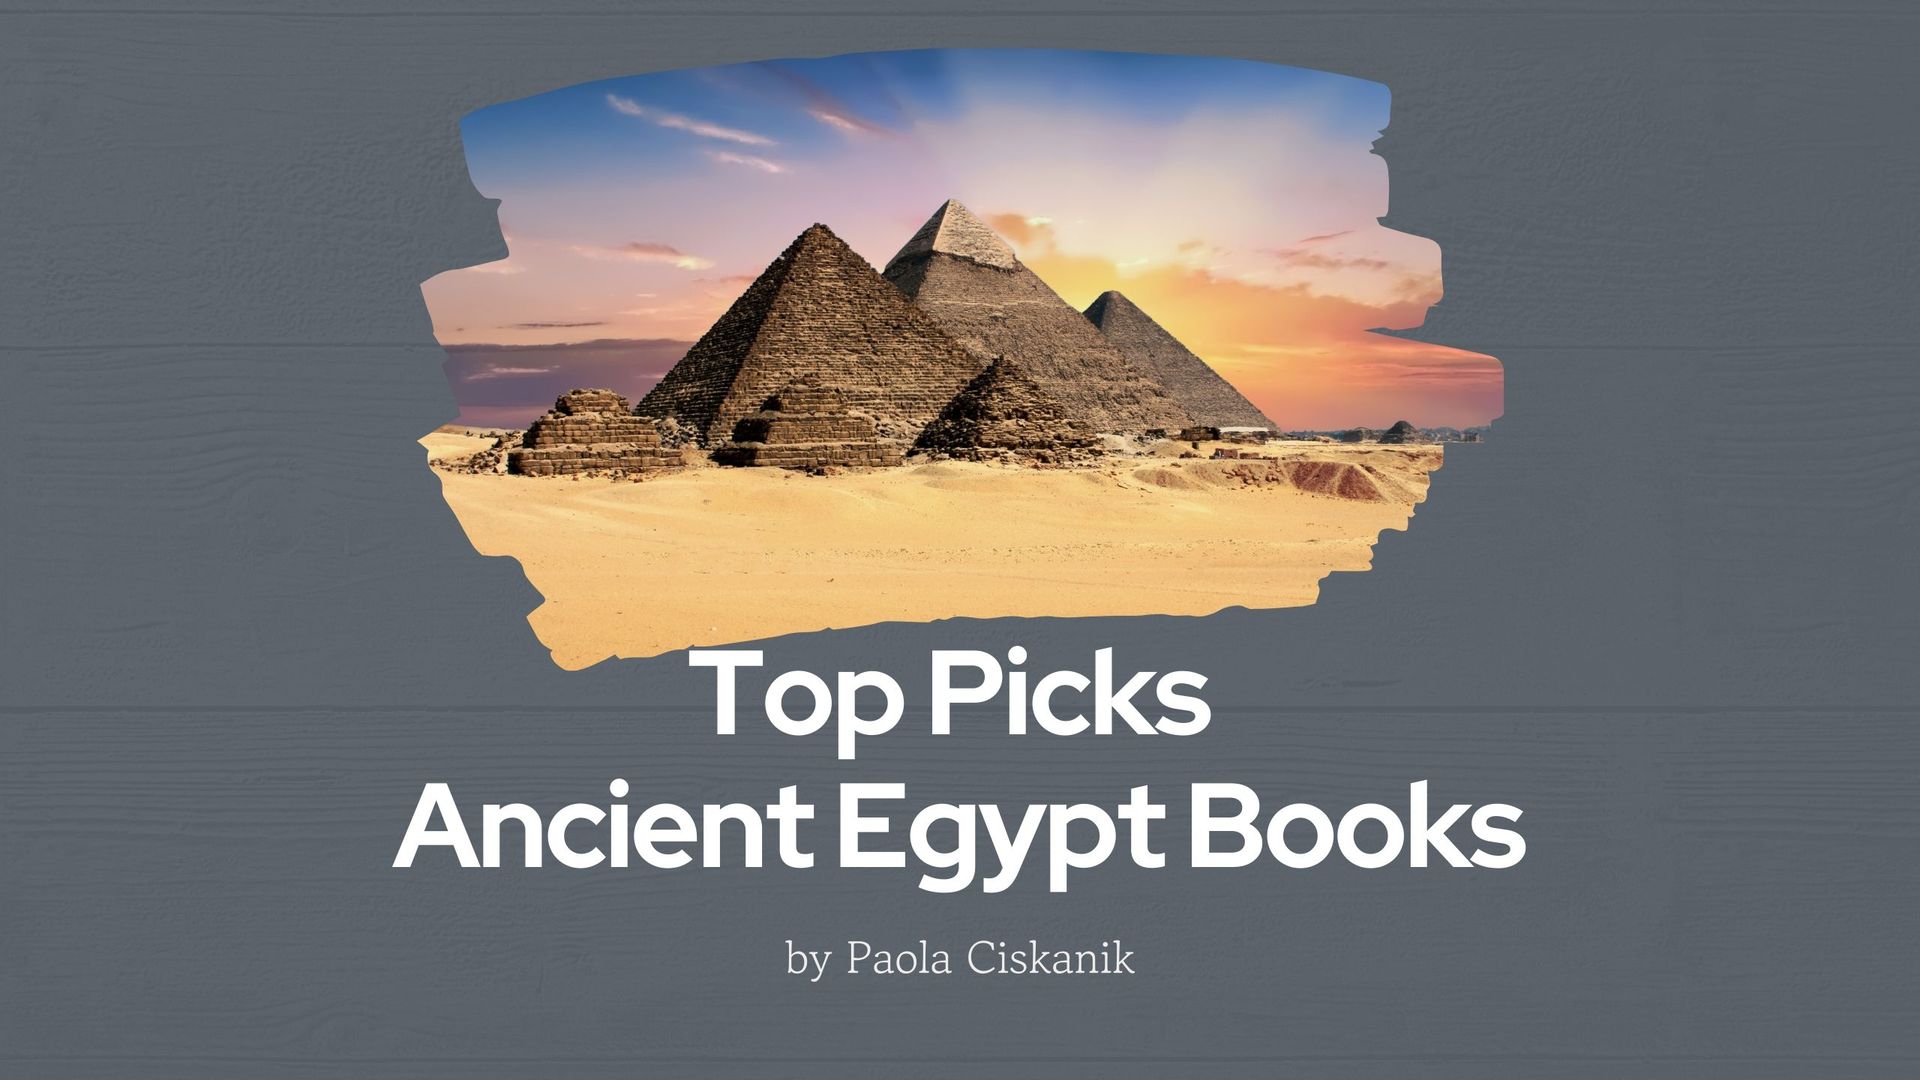 Top Picks Ancient Egypt Books